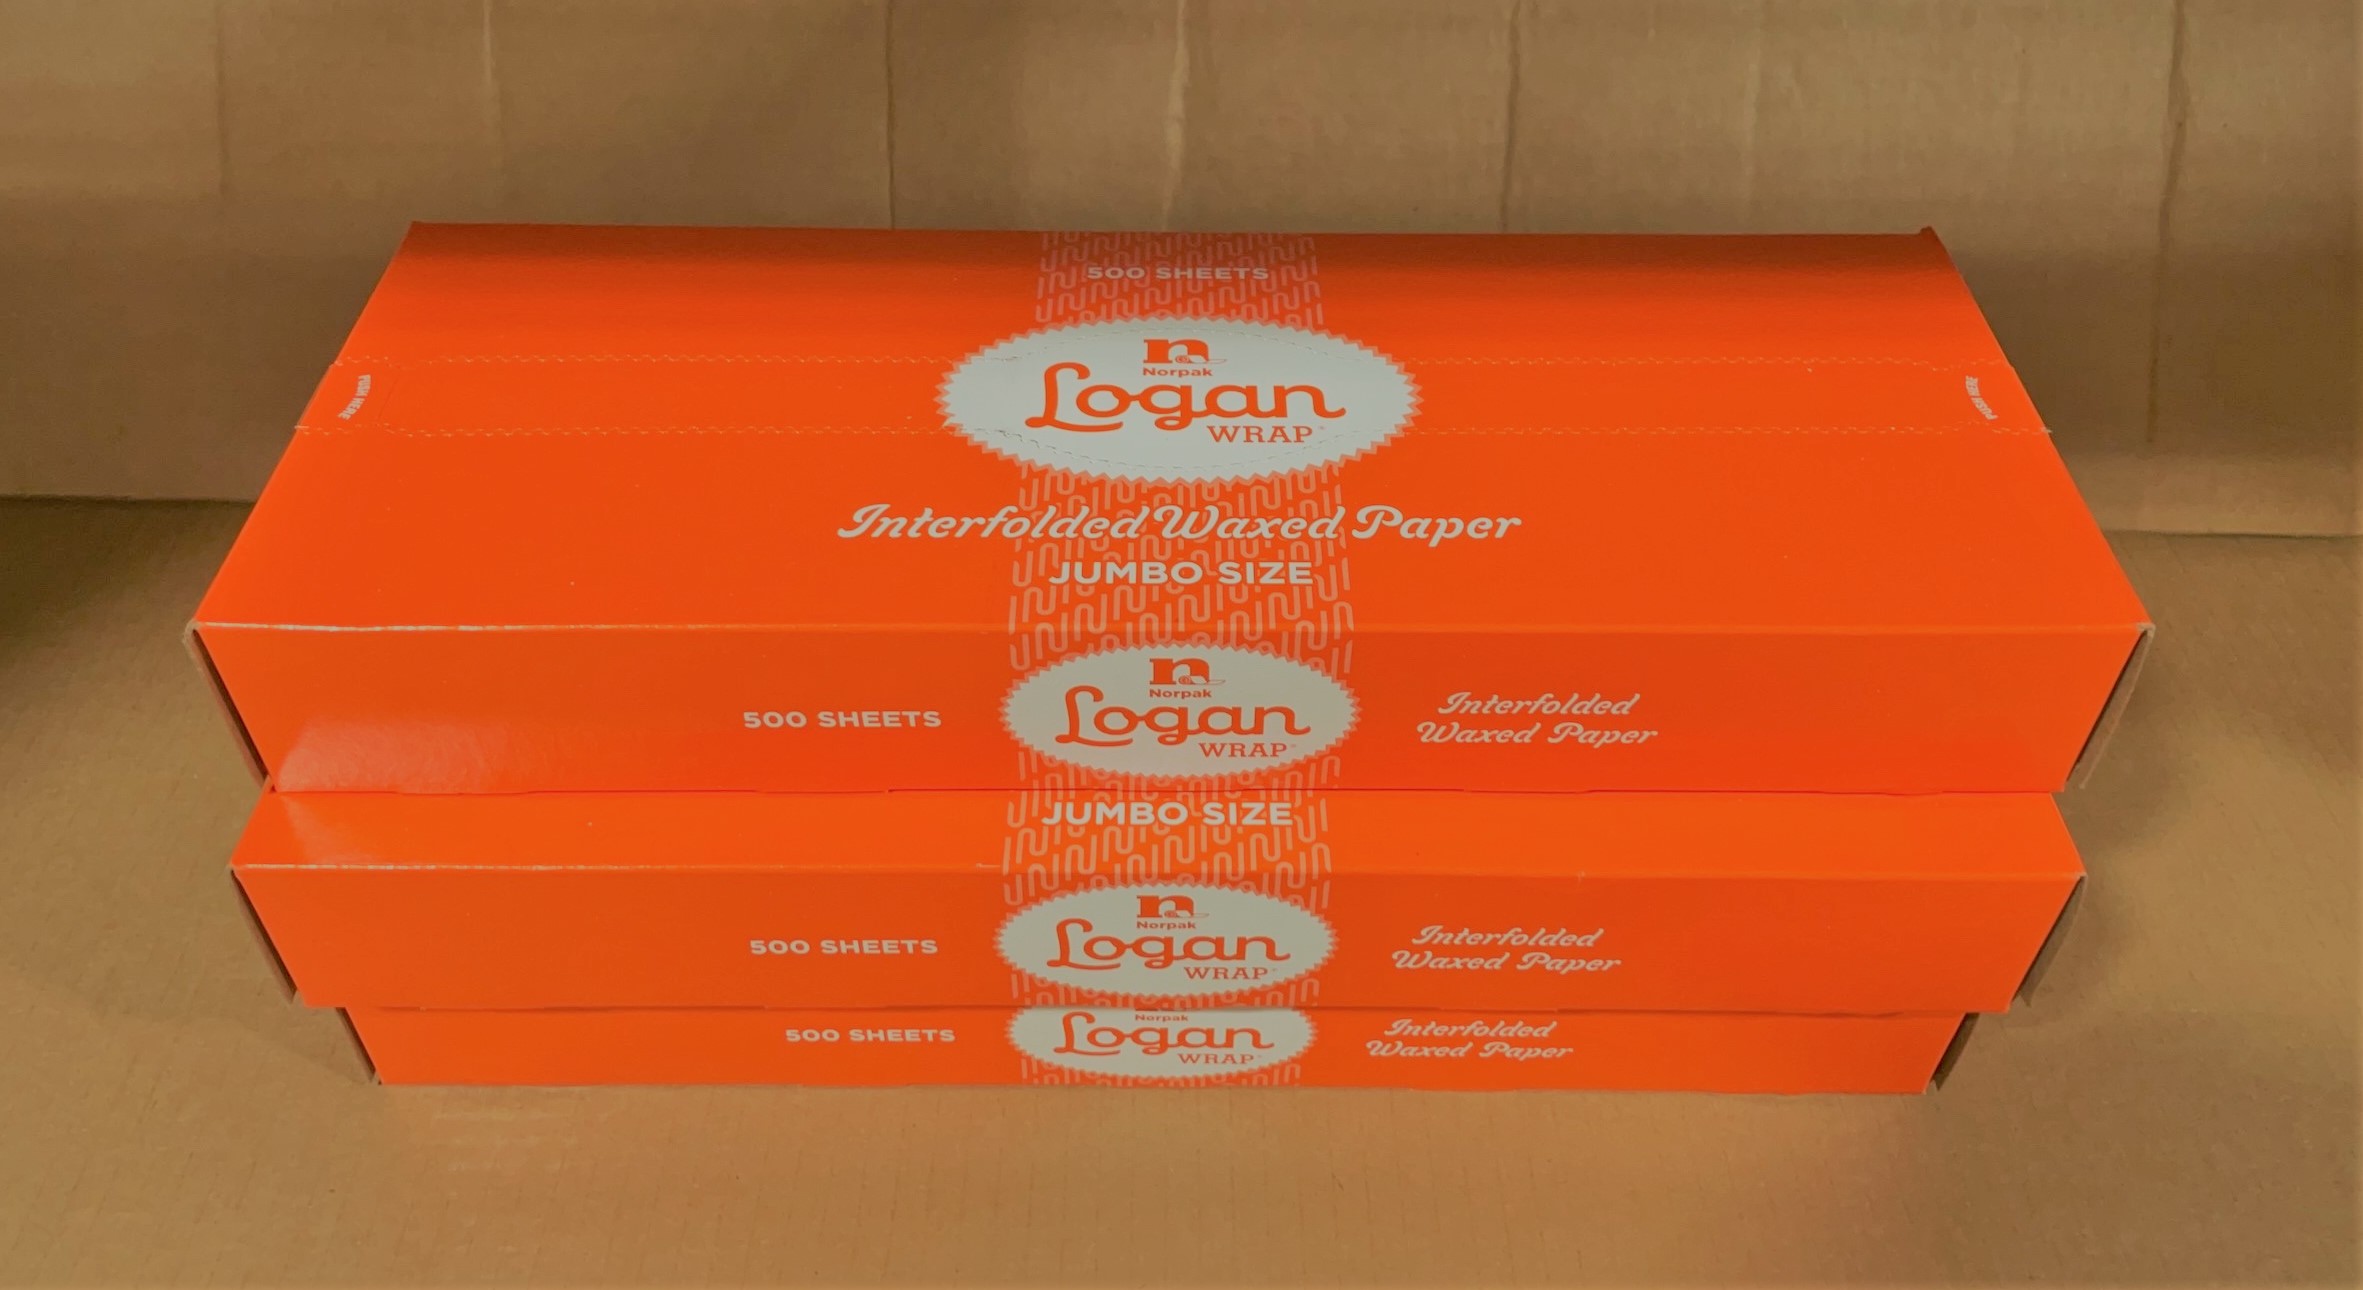 Logan - Interfolded Waxed Paper, Jumbo Size, 500 sheets